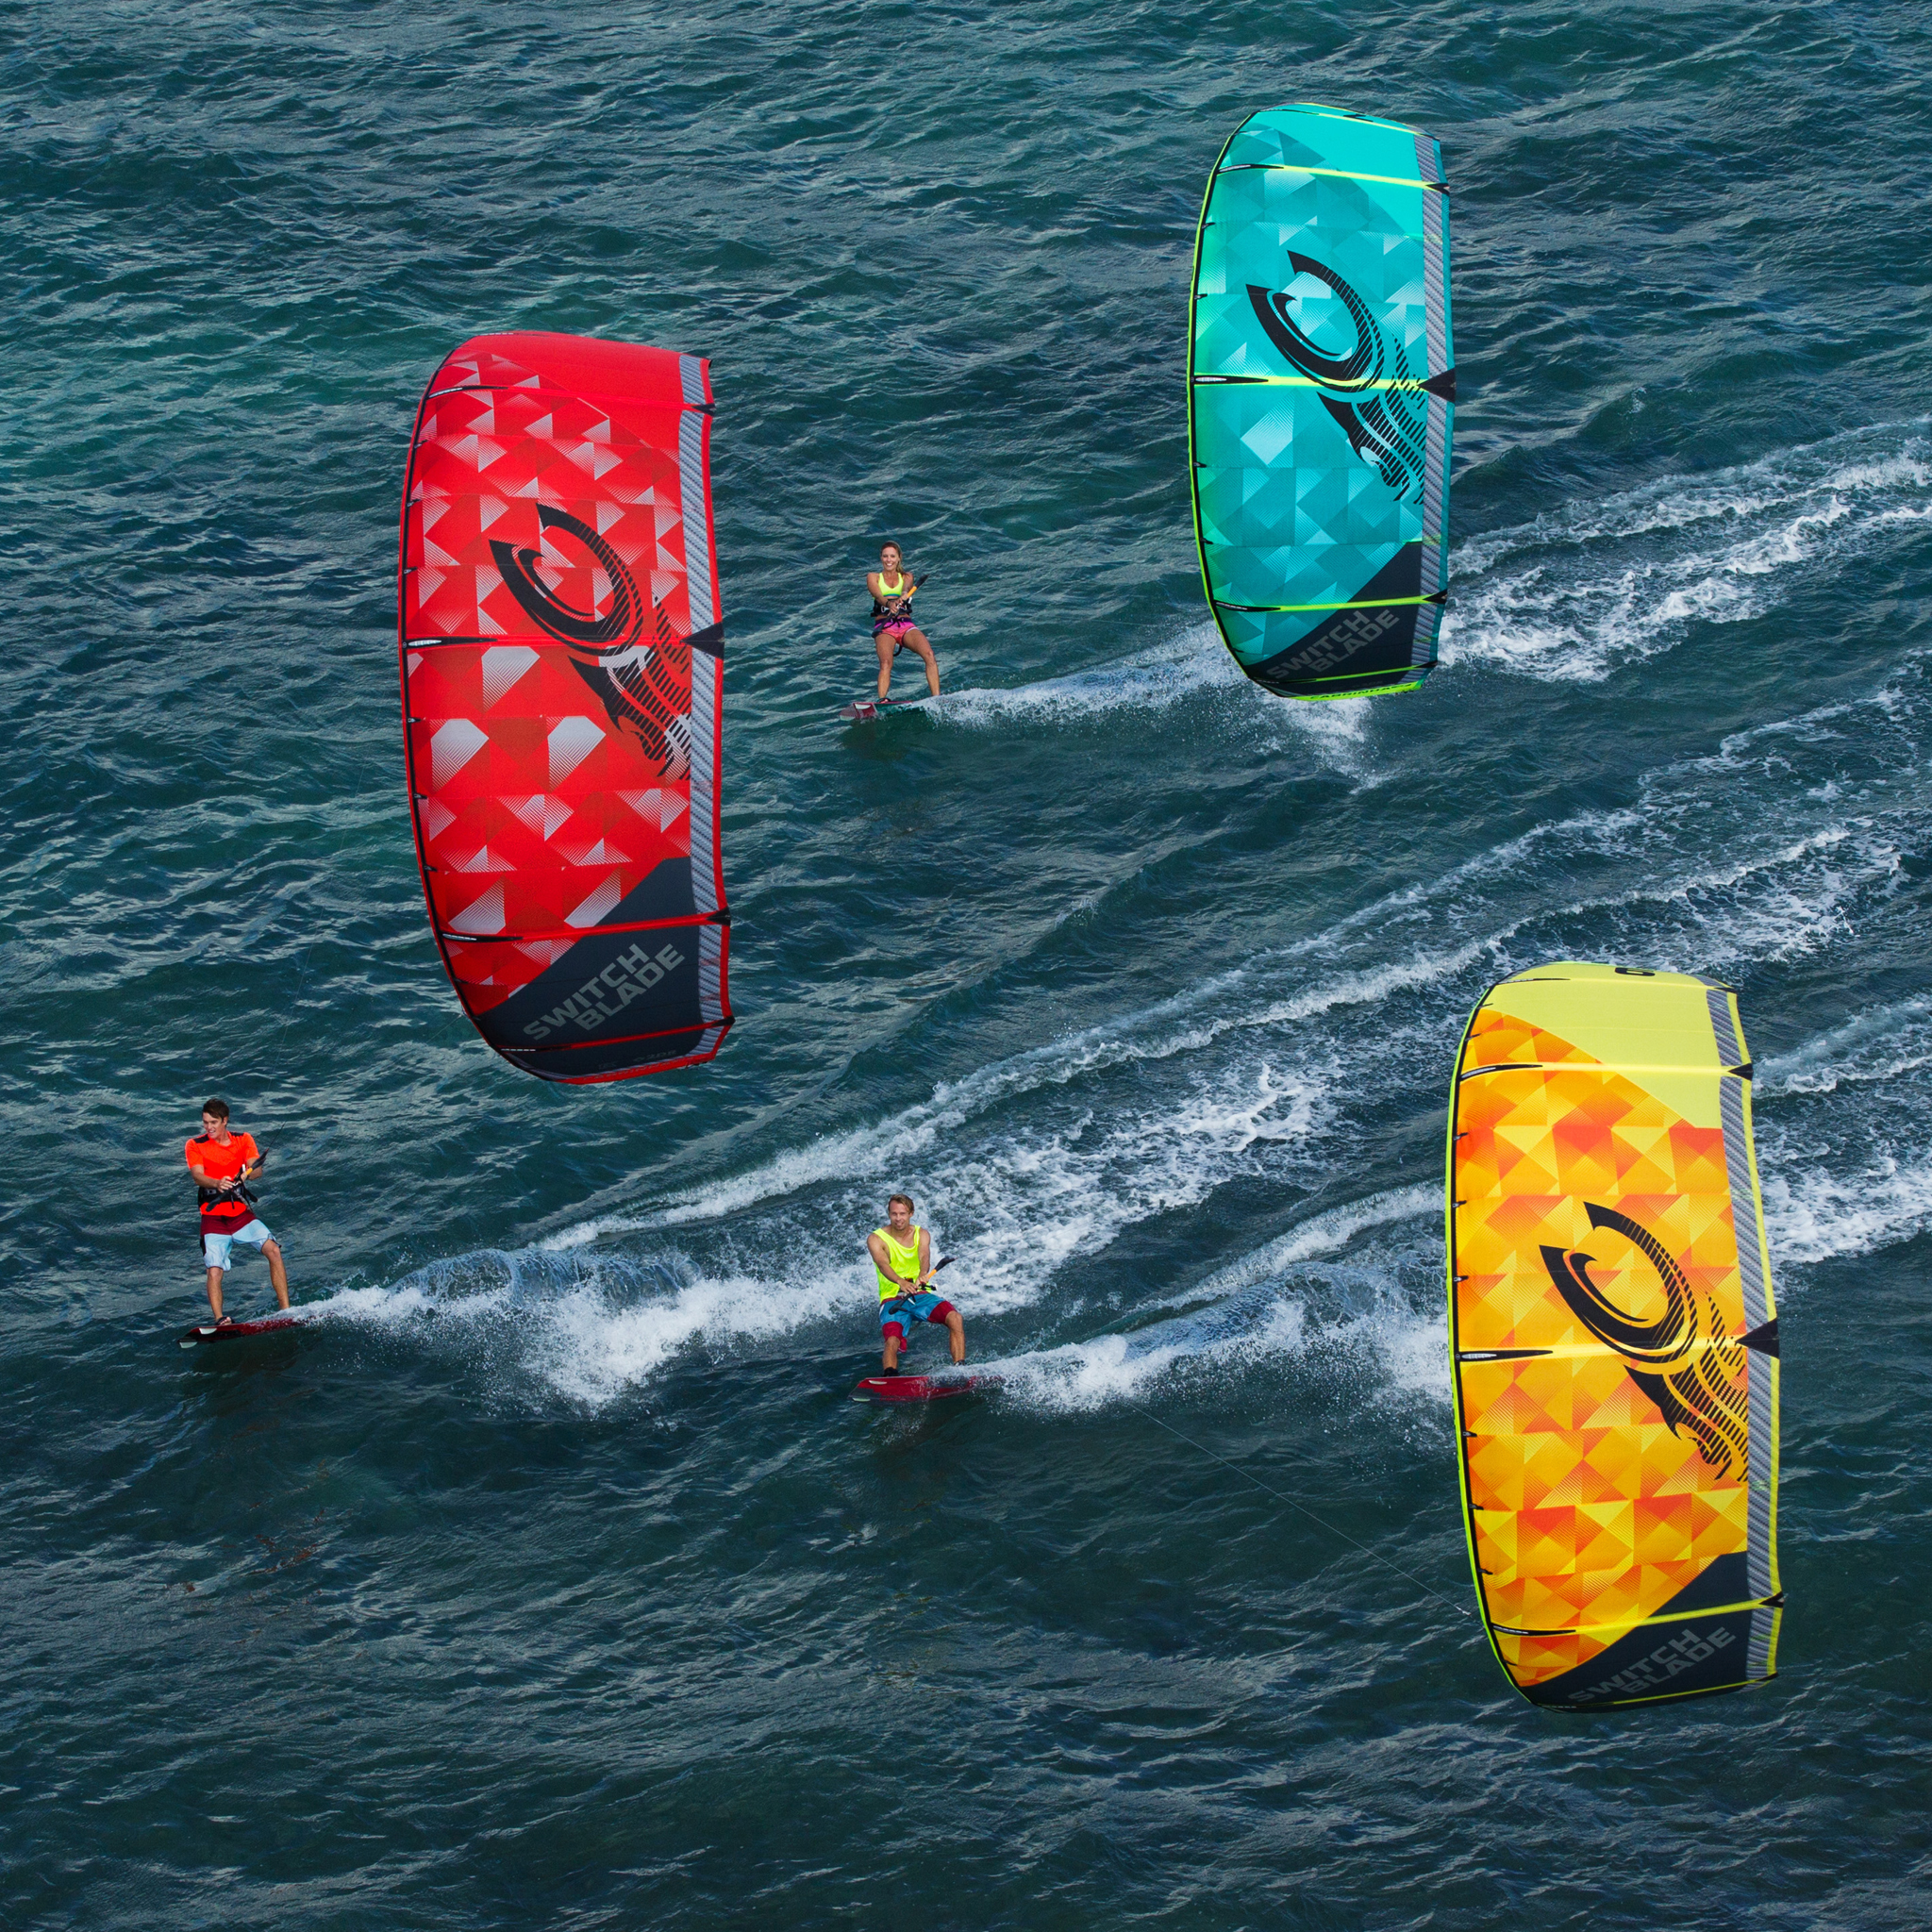 kitesurf wallpaper image - Cabrinha 2015 Switchblade cruising trio - in resolution: iPad 2 & 3 2048 X 2048